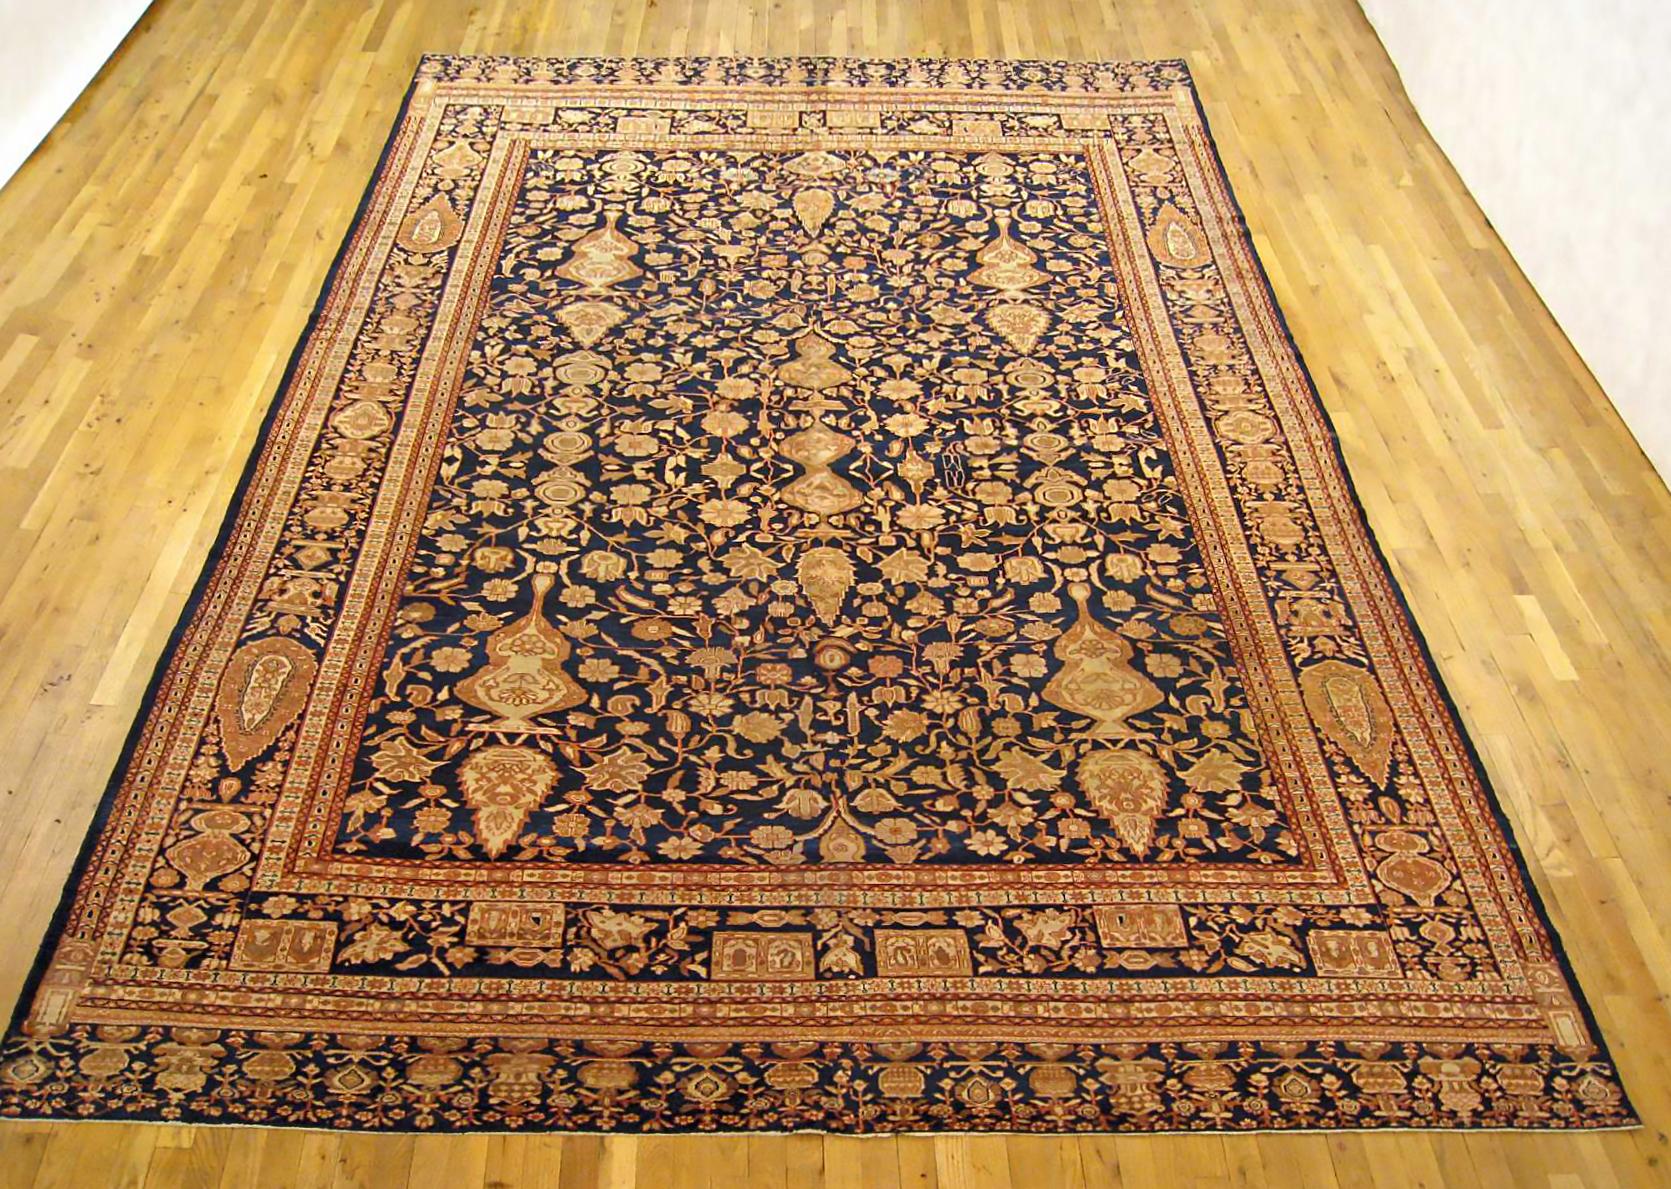 Antiker Ferahan Sarouk Orientteppich, um 1900, Raumgröße.

Ein antiker Ferahan Sarouk Orientteppich, Größe 12' 5